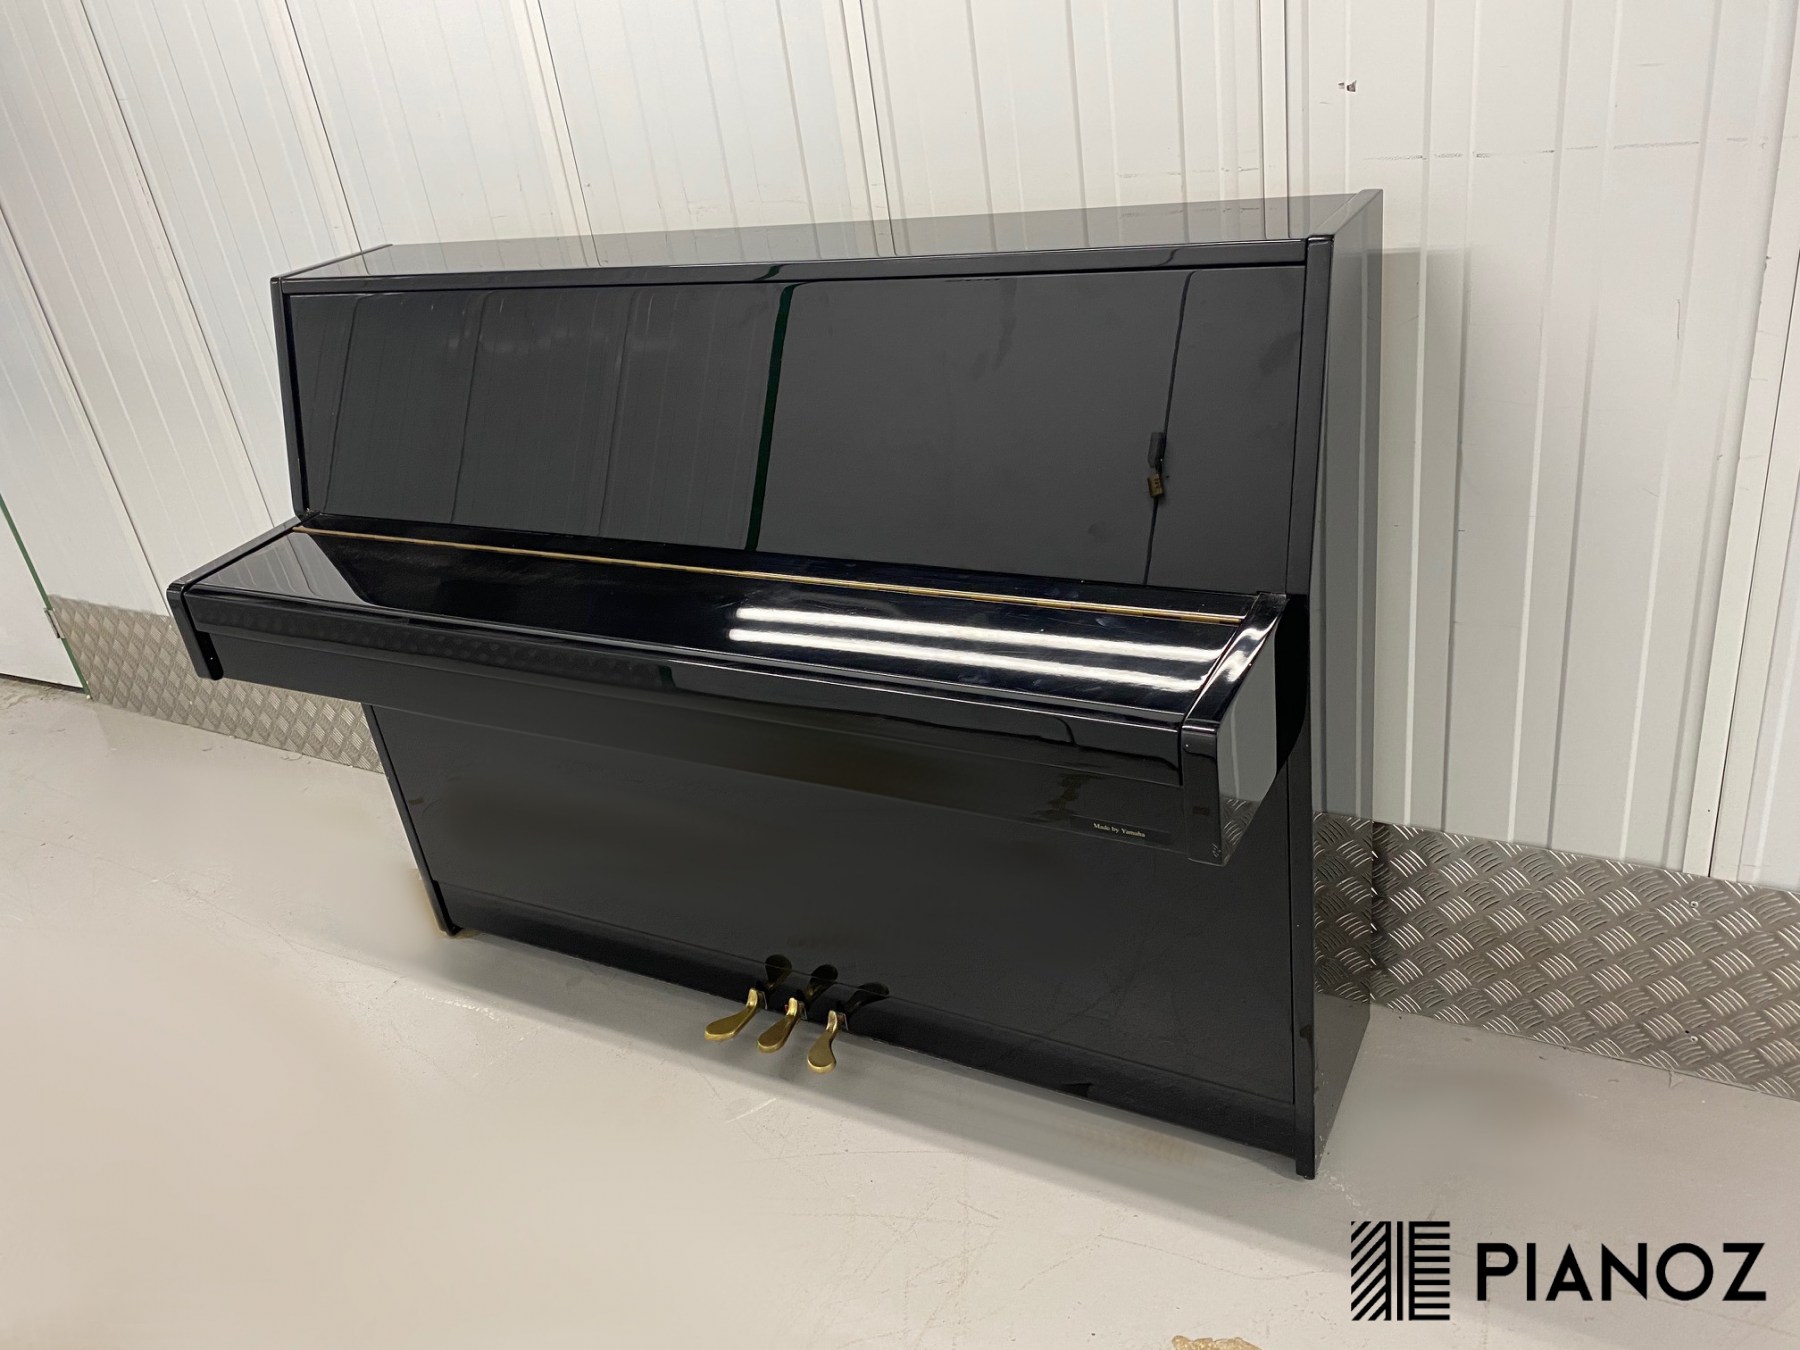 Yamaha Eterna Upright Piano piano for sale in UK